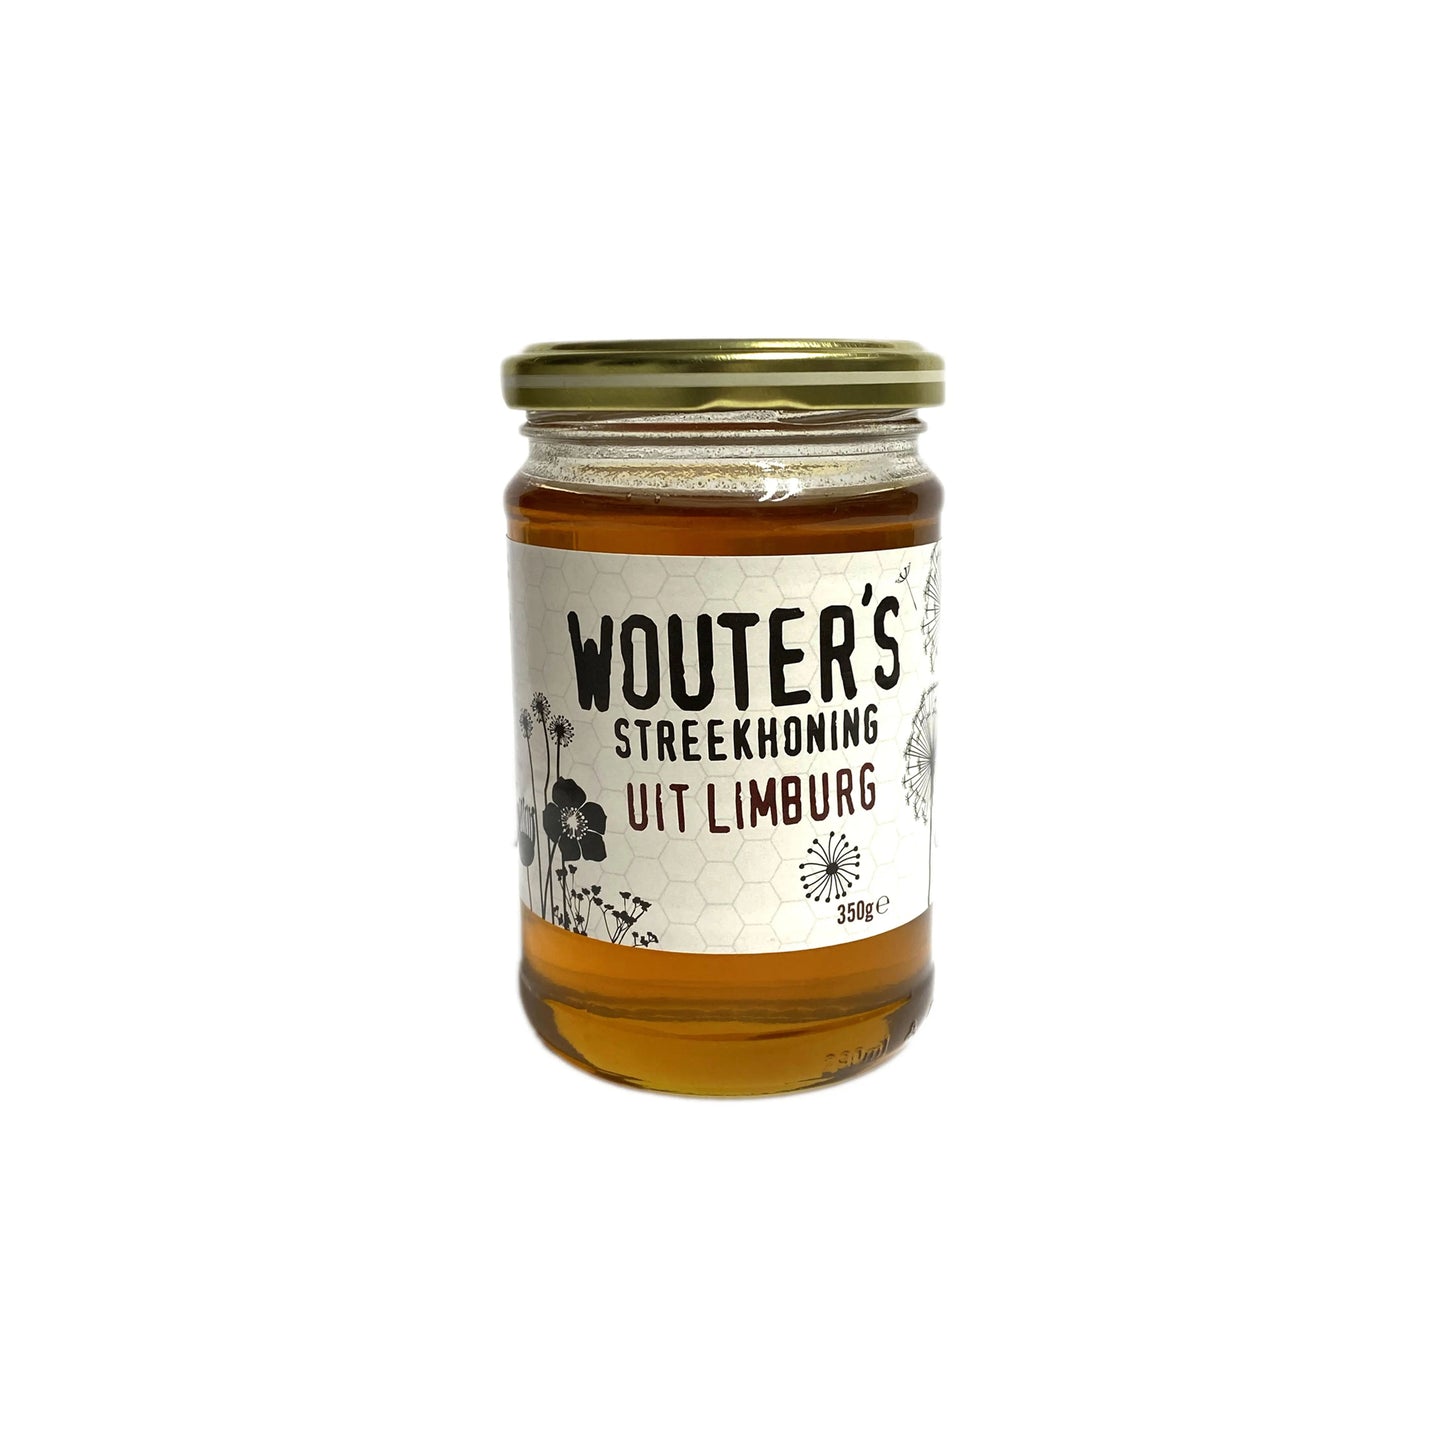 Wouter's streekhoning uit Limburg Nederland 350g (vloeibaar) - Honingwinkel